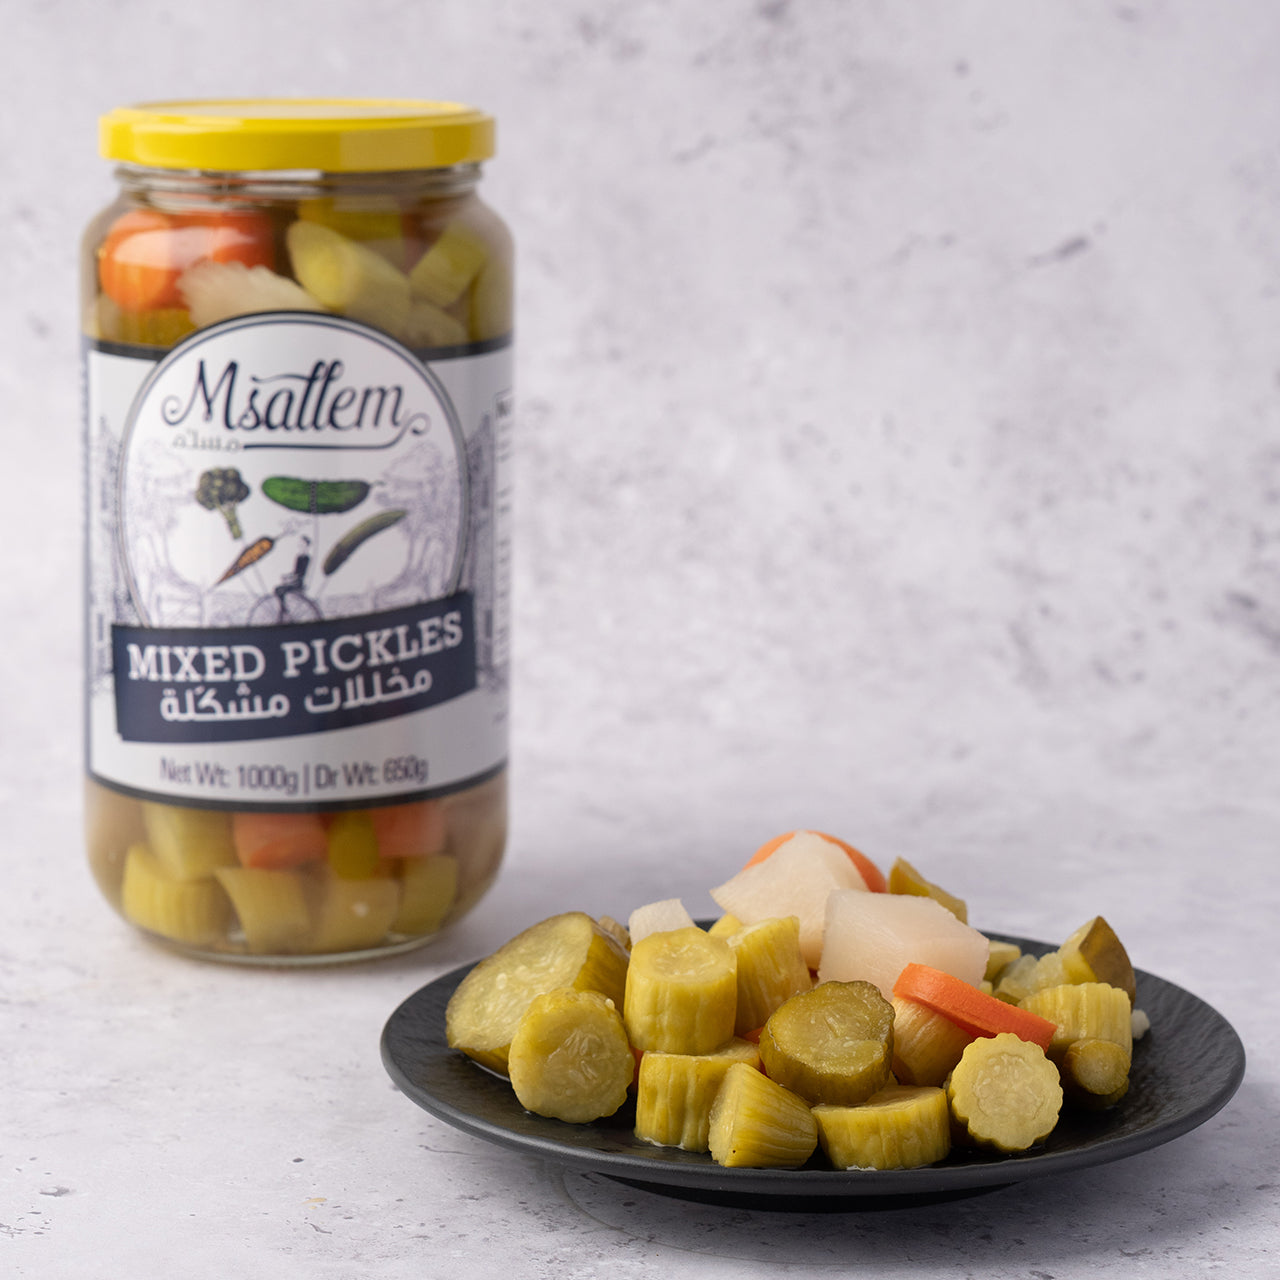 Msallem Mixed Pickles 1kg